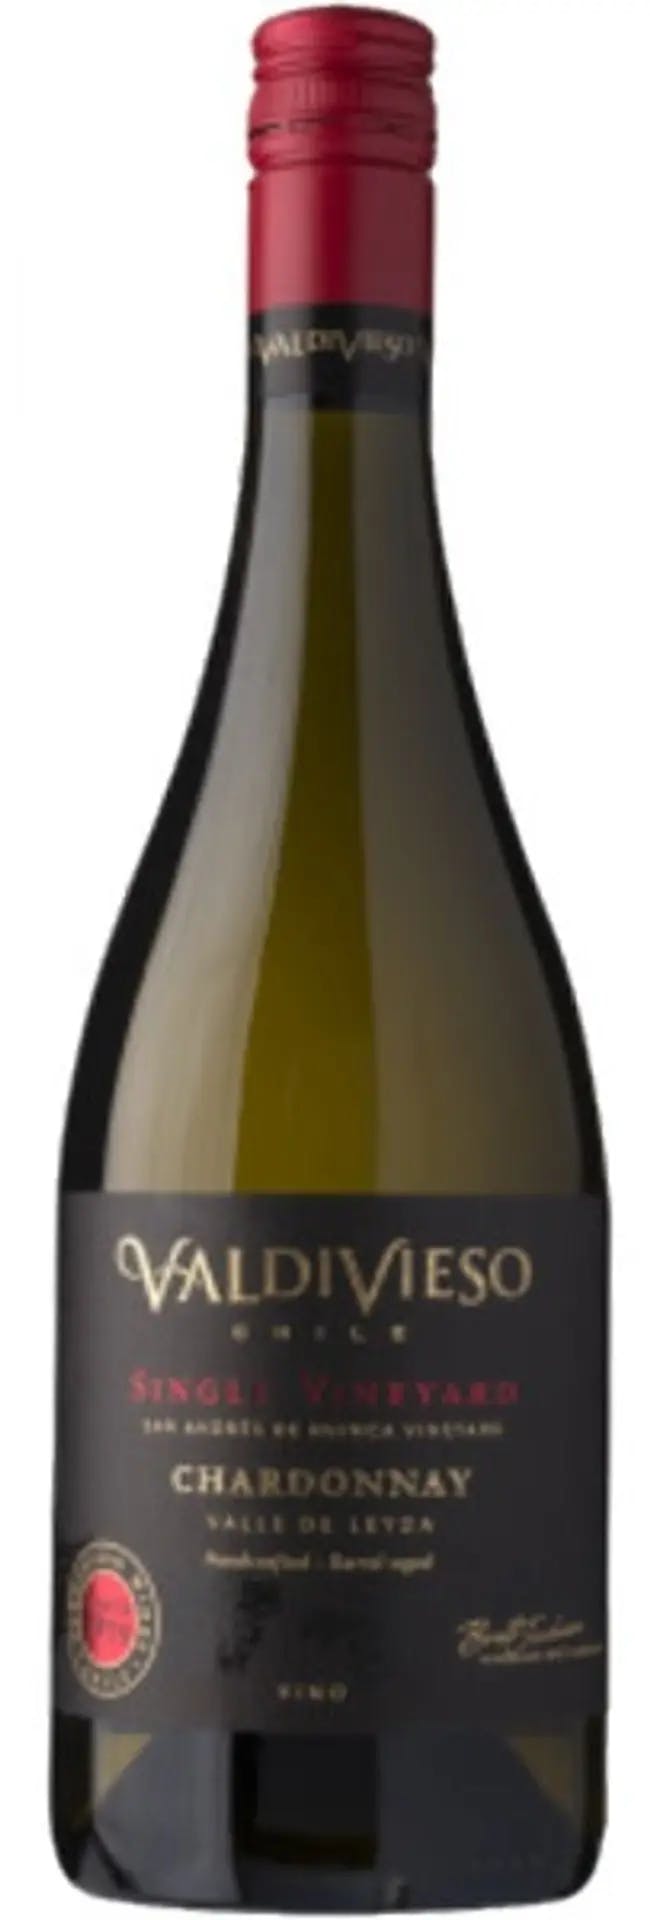 Valdivieso Single Vineyard Chardonnay